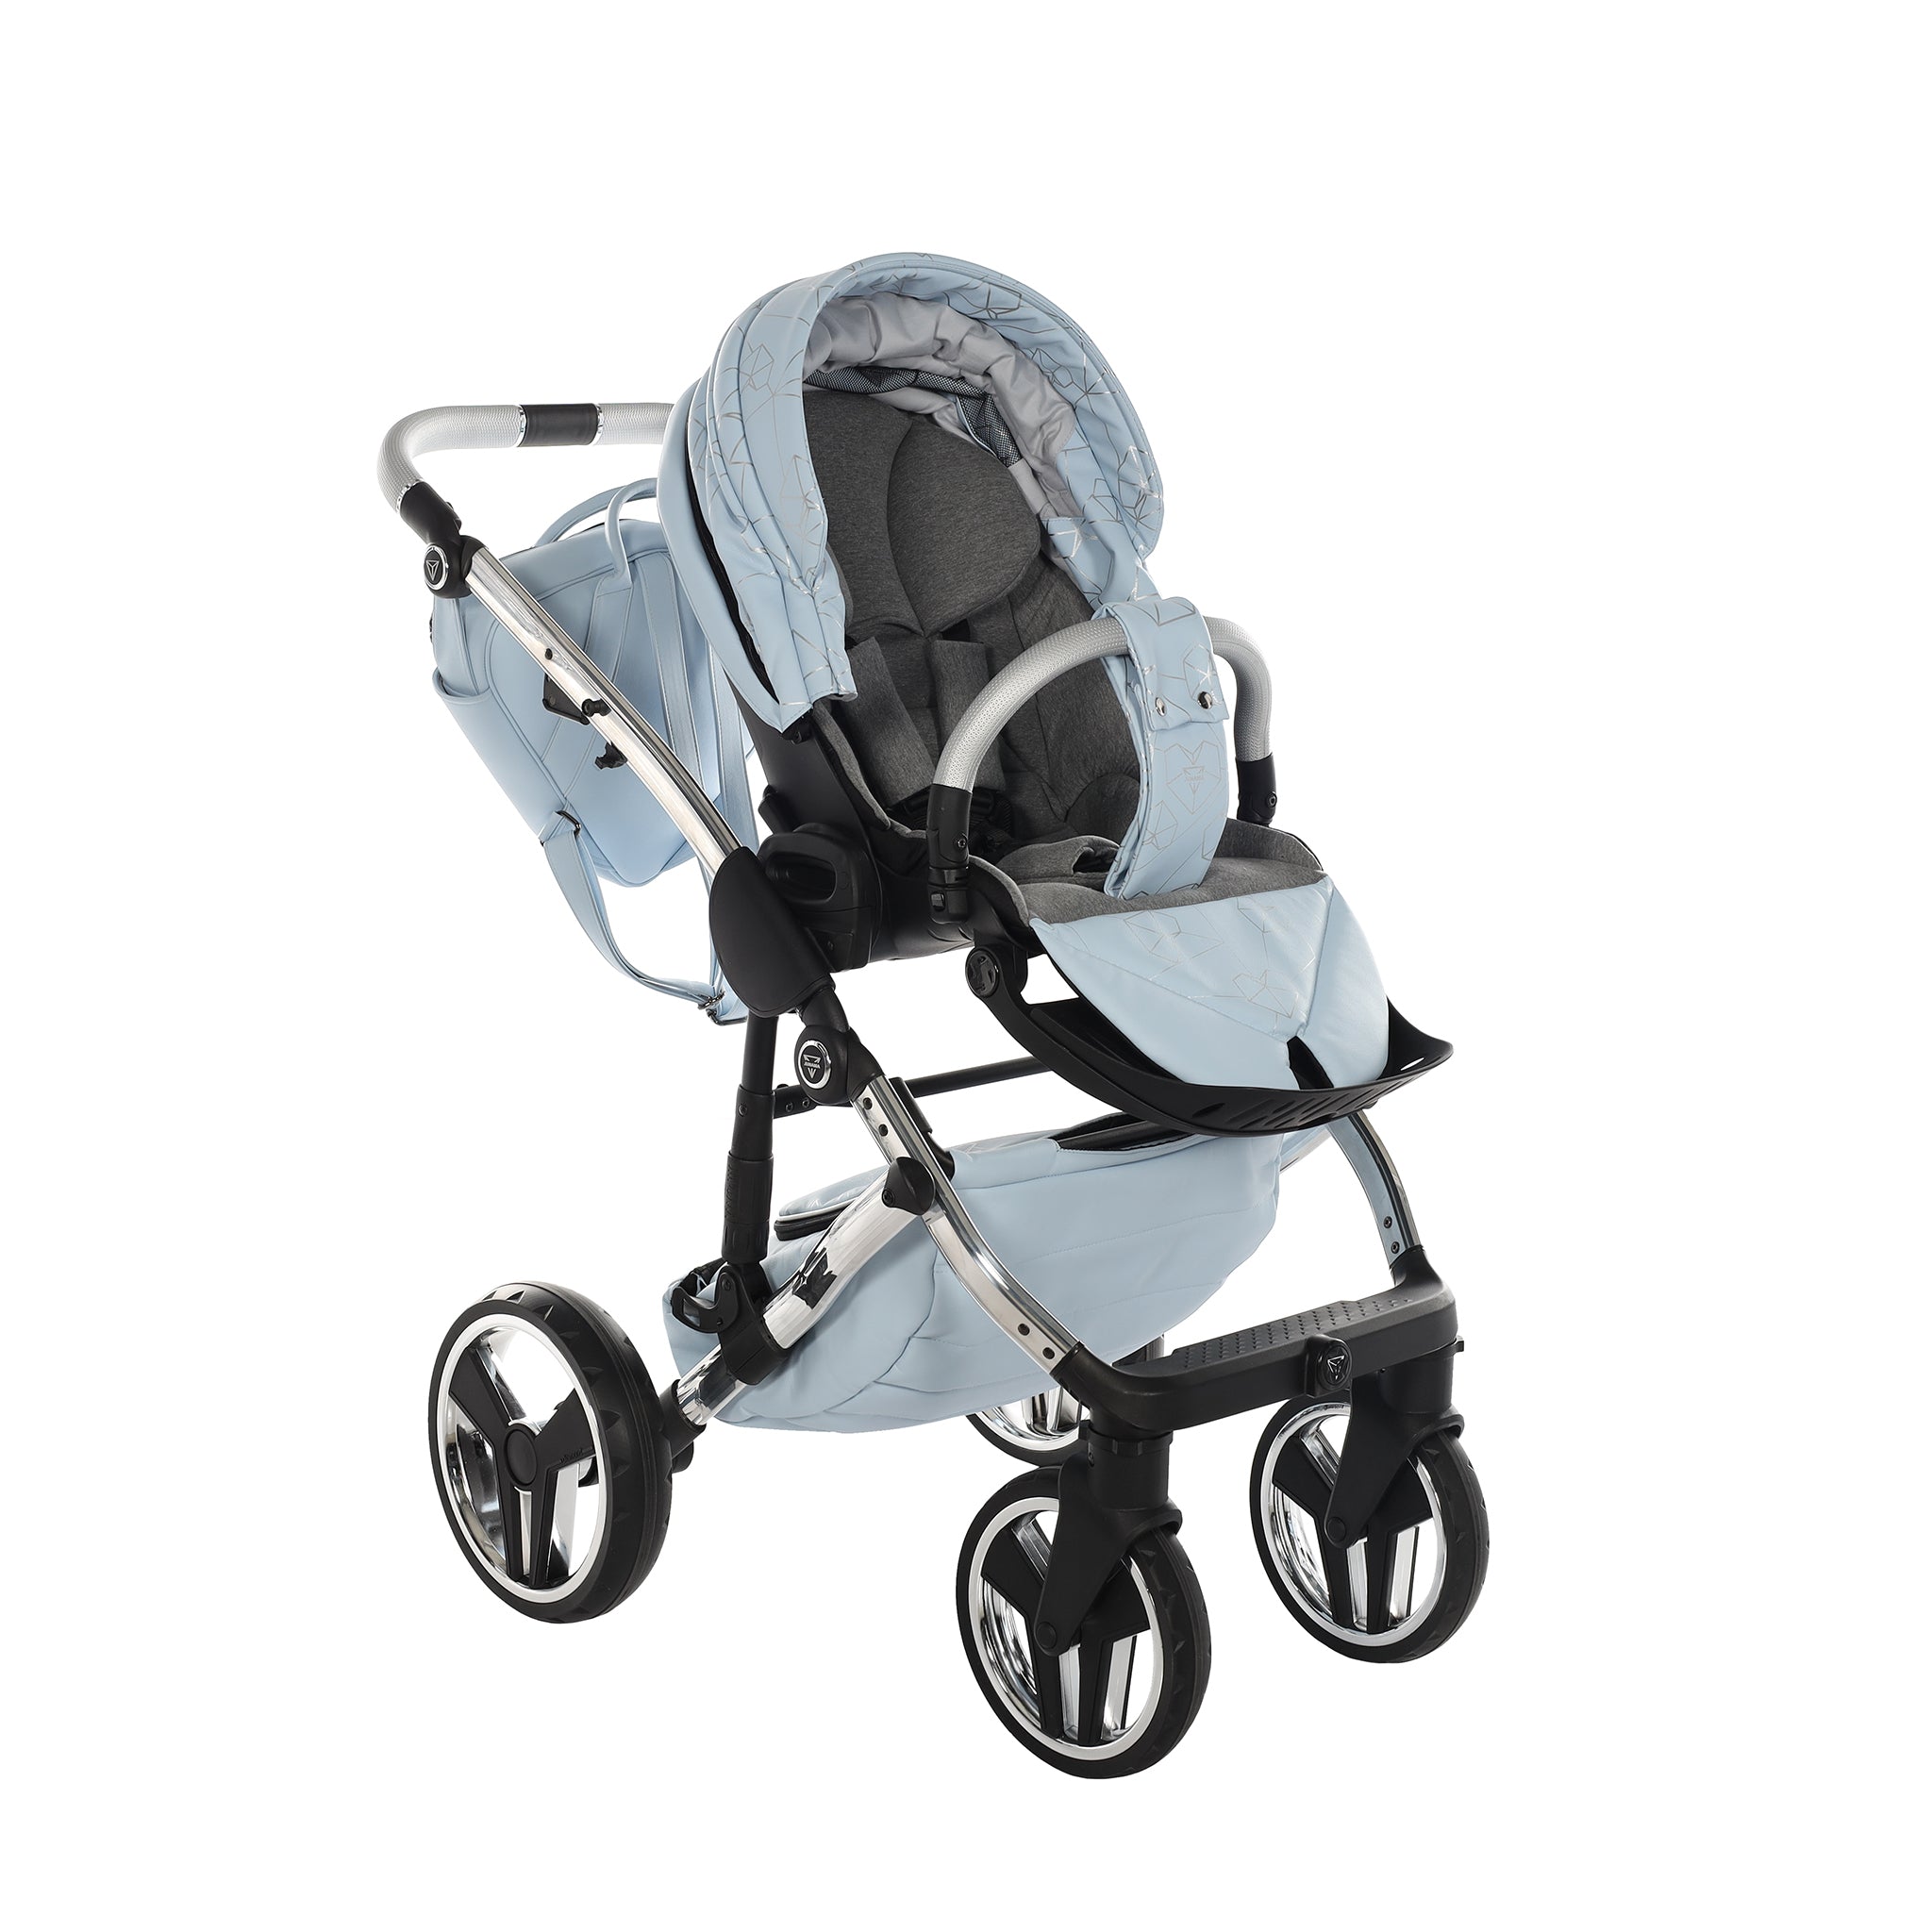 Junama Heart, baby prams or stroller 2 in 1 - Blue and Silver, Code number: JUNHERT08